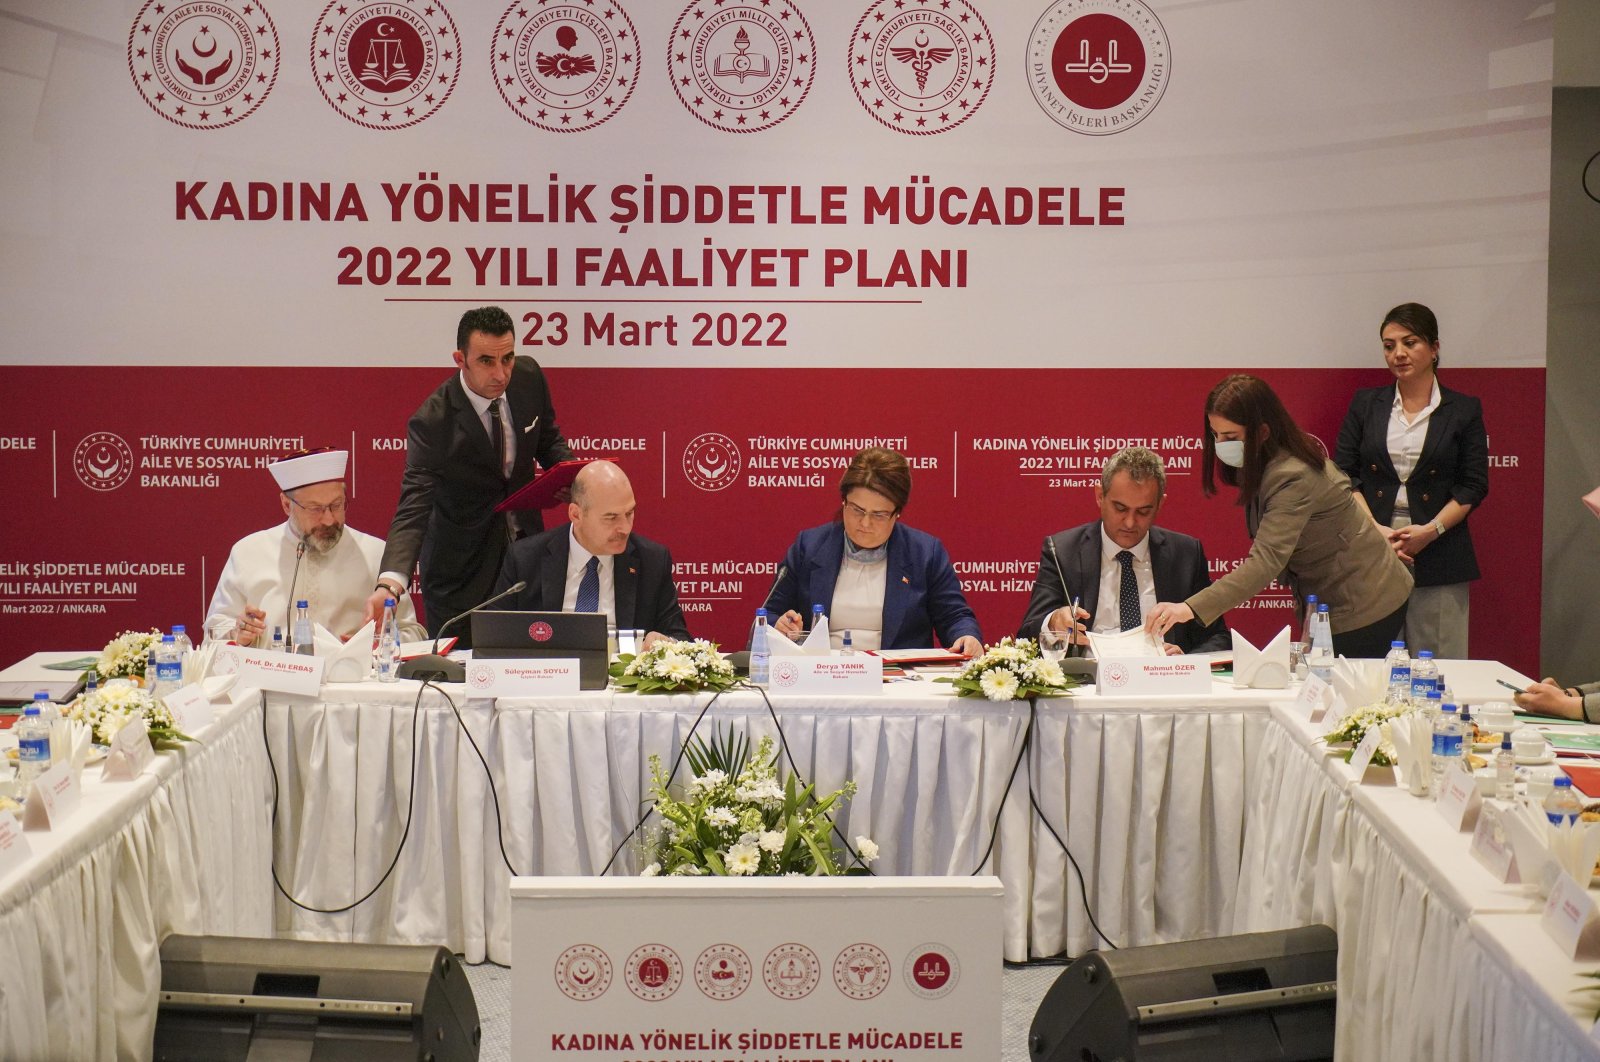 Ministers Süleyman Soylu (2nd L), Derya Yanık (C), Mahmut Özer (R) and Diyanet president Ali Erbaş (L) sign a cooperation protocol, in the capital Ankara, Turkey, March 23, 2022. (DHA PHOTO)